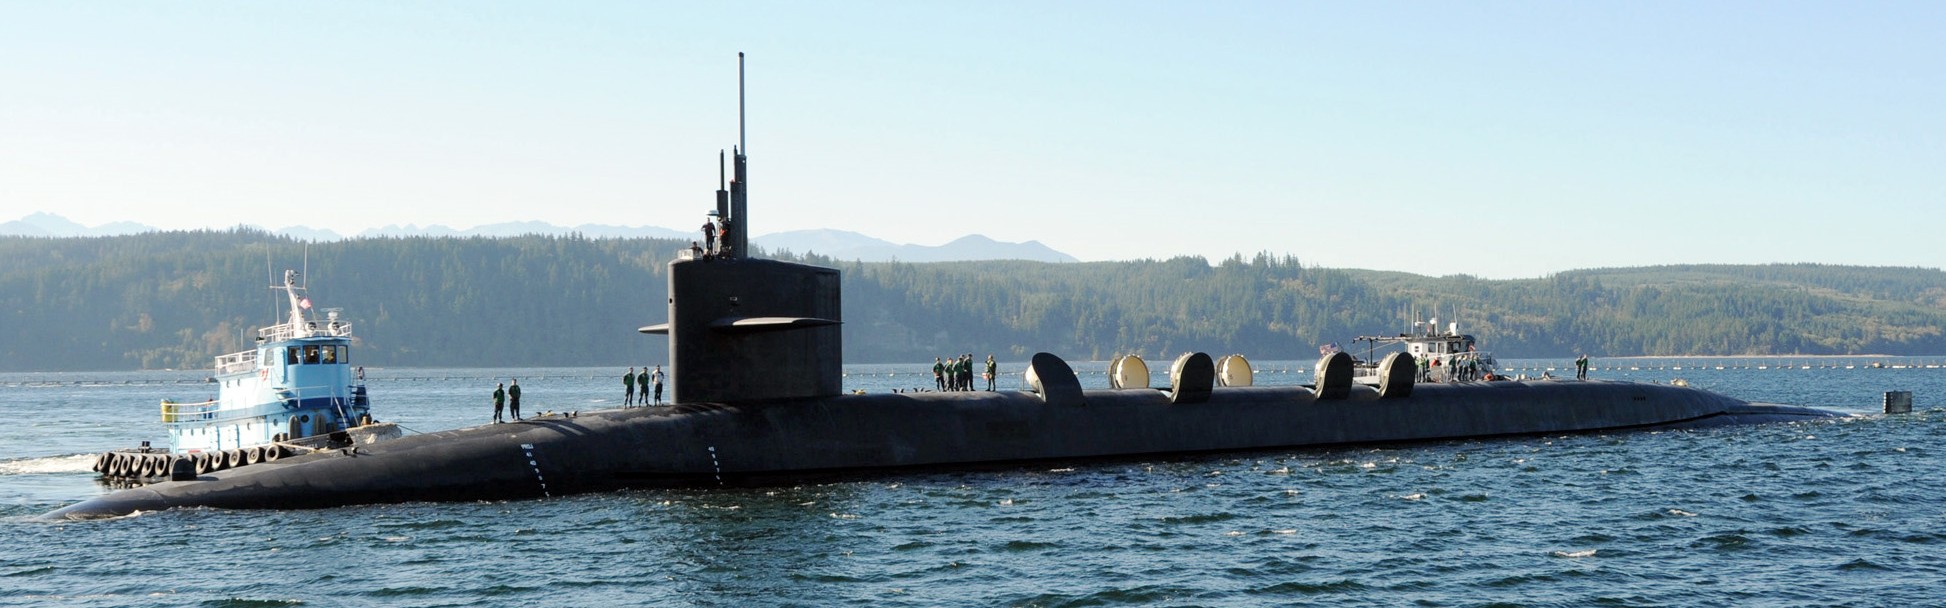 ssbn-731 uss alabama ohio class ballistic missile submarine 2010 22 naval base kitsap bangor bremerton washington